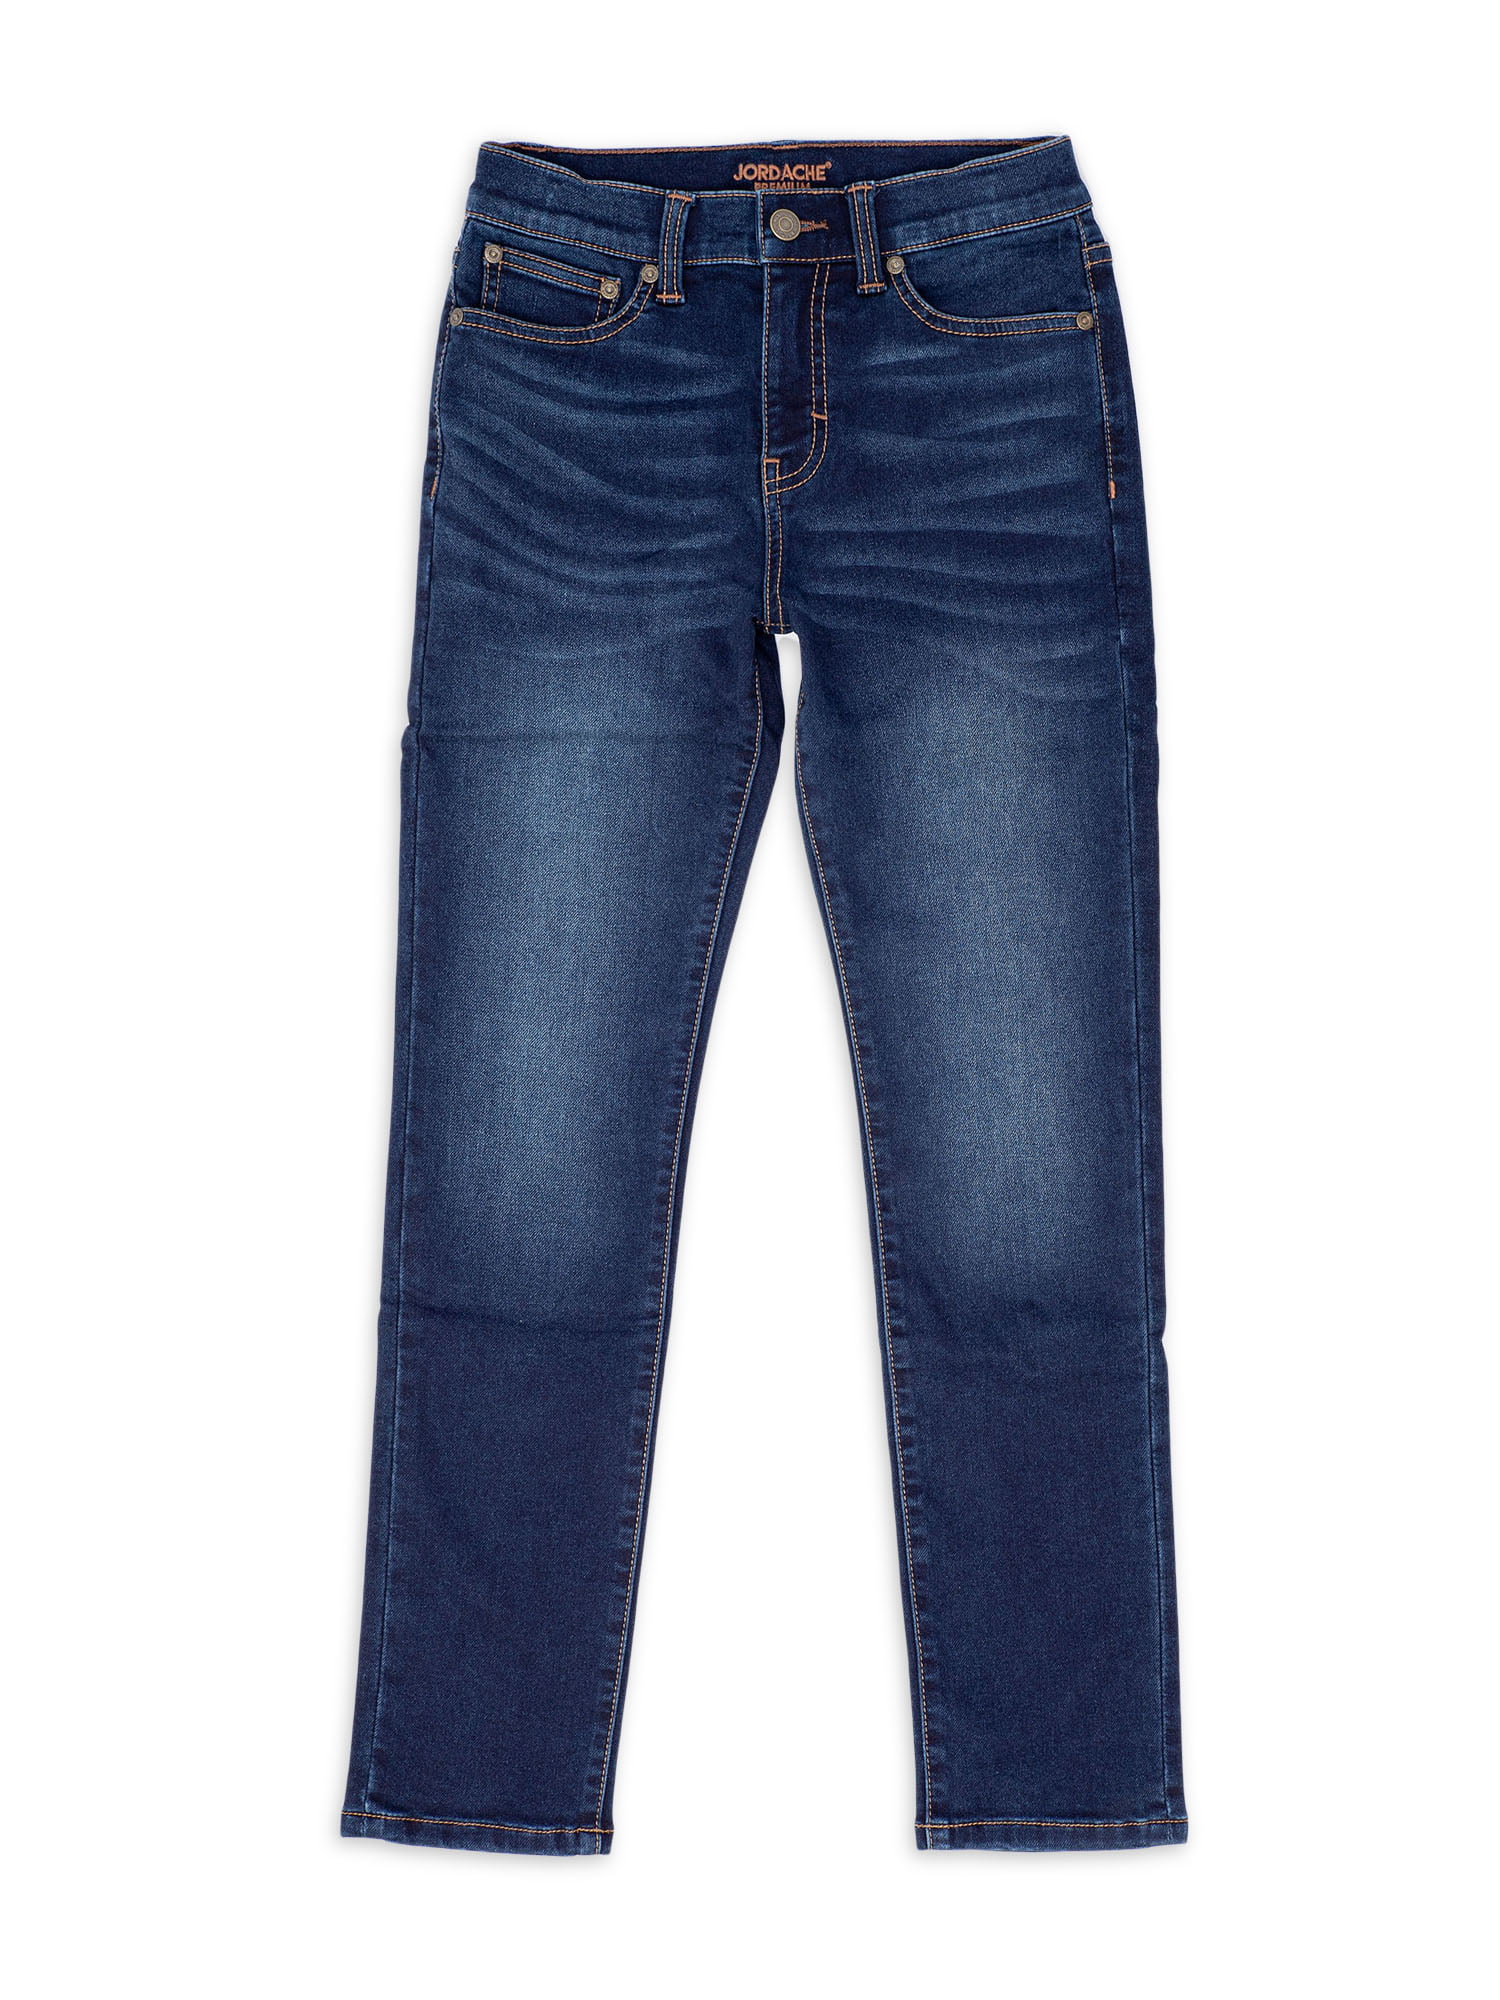 Jordache Boys Knit Denim Jeans, Sizes 4-18 & Husky - Walmart.com